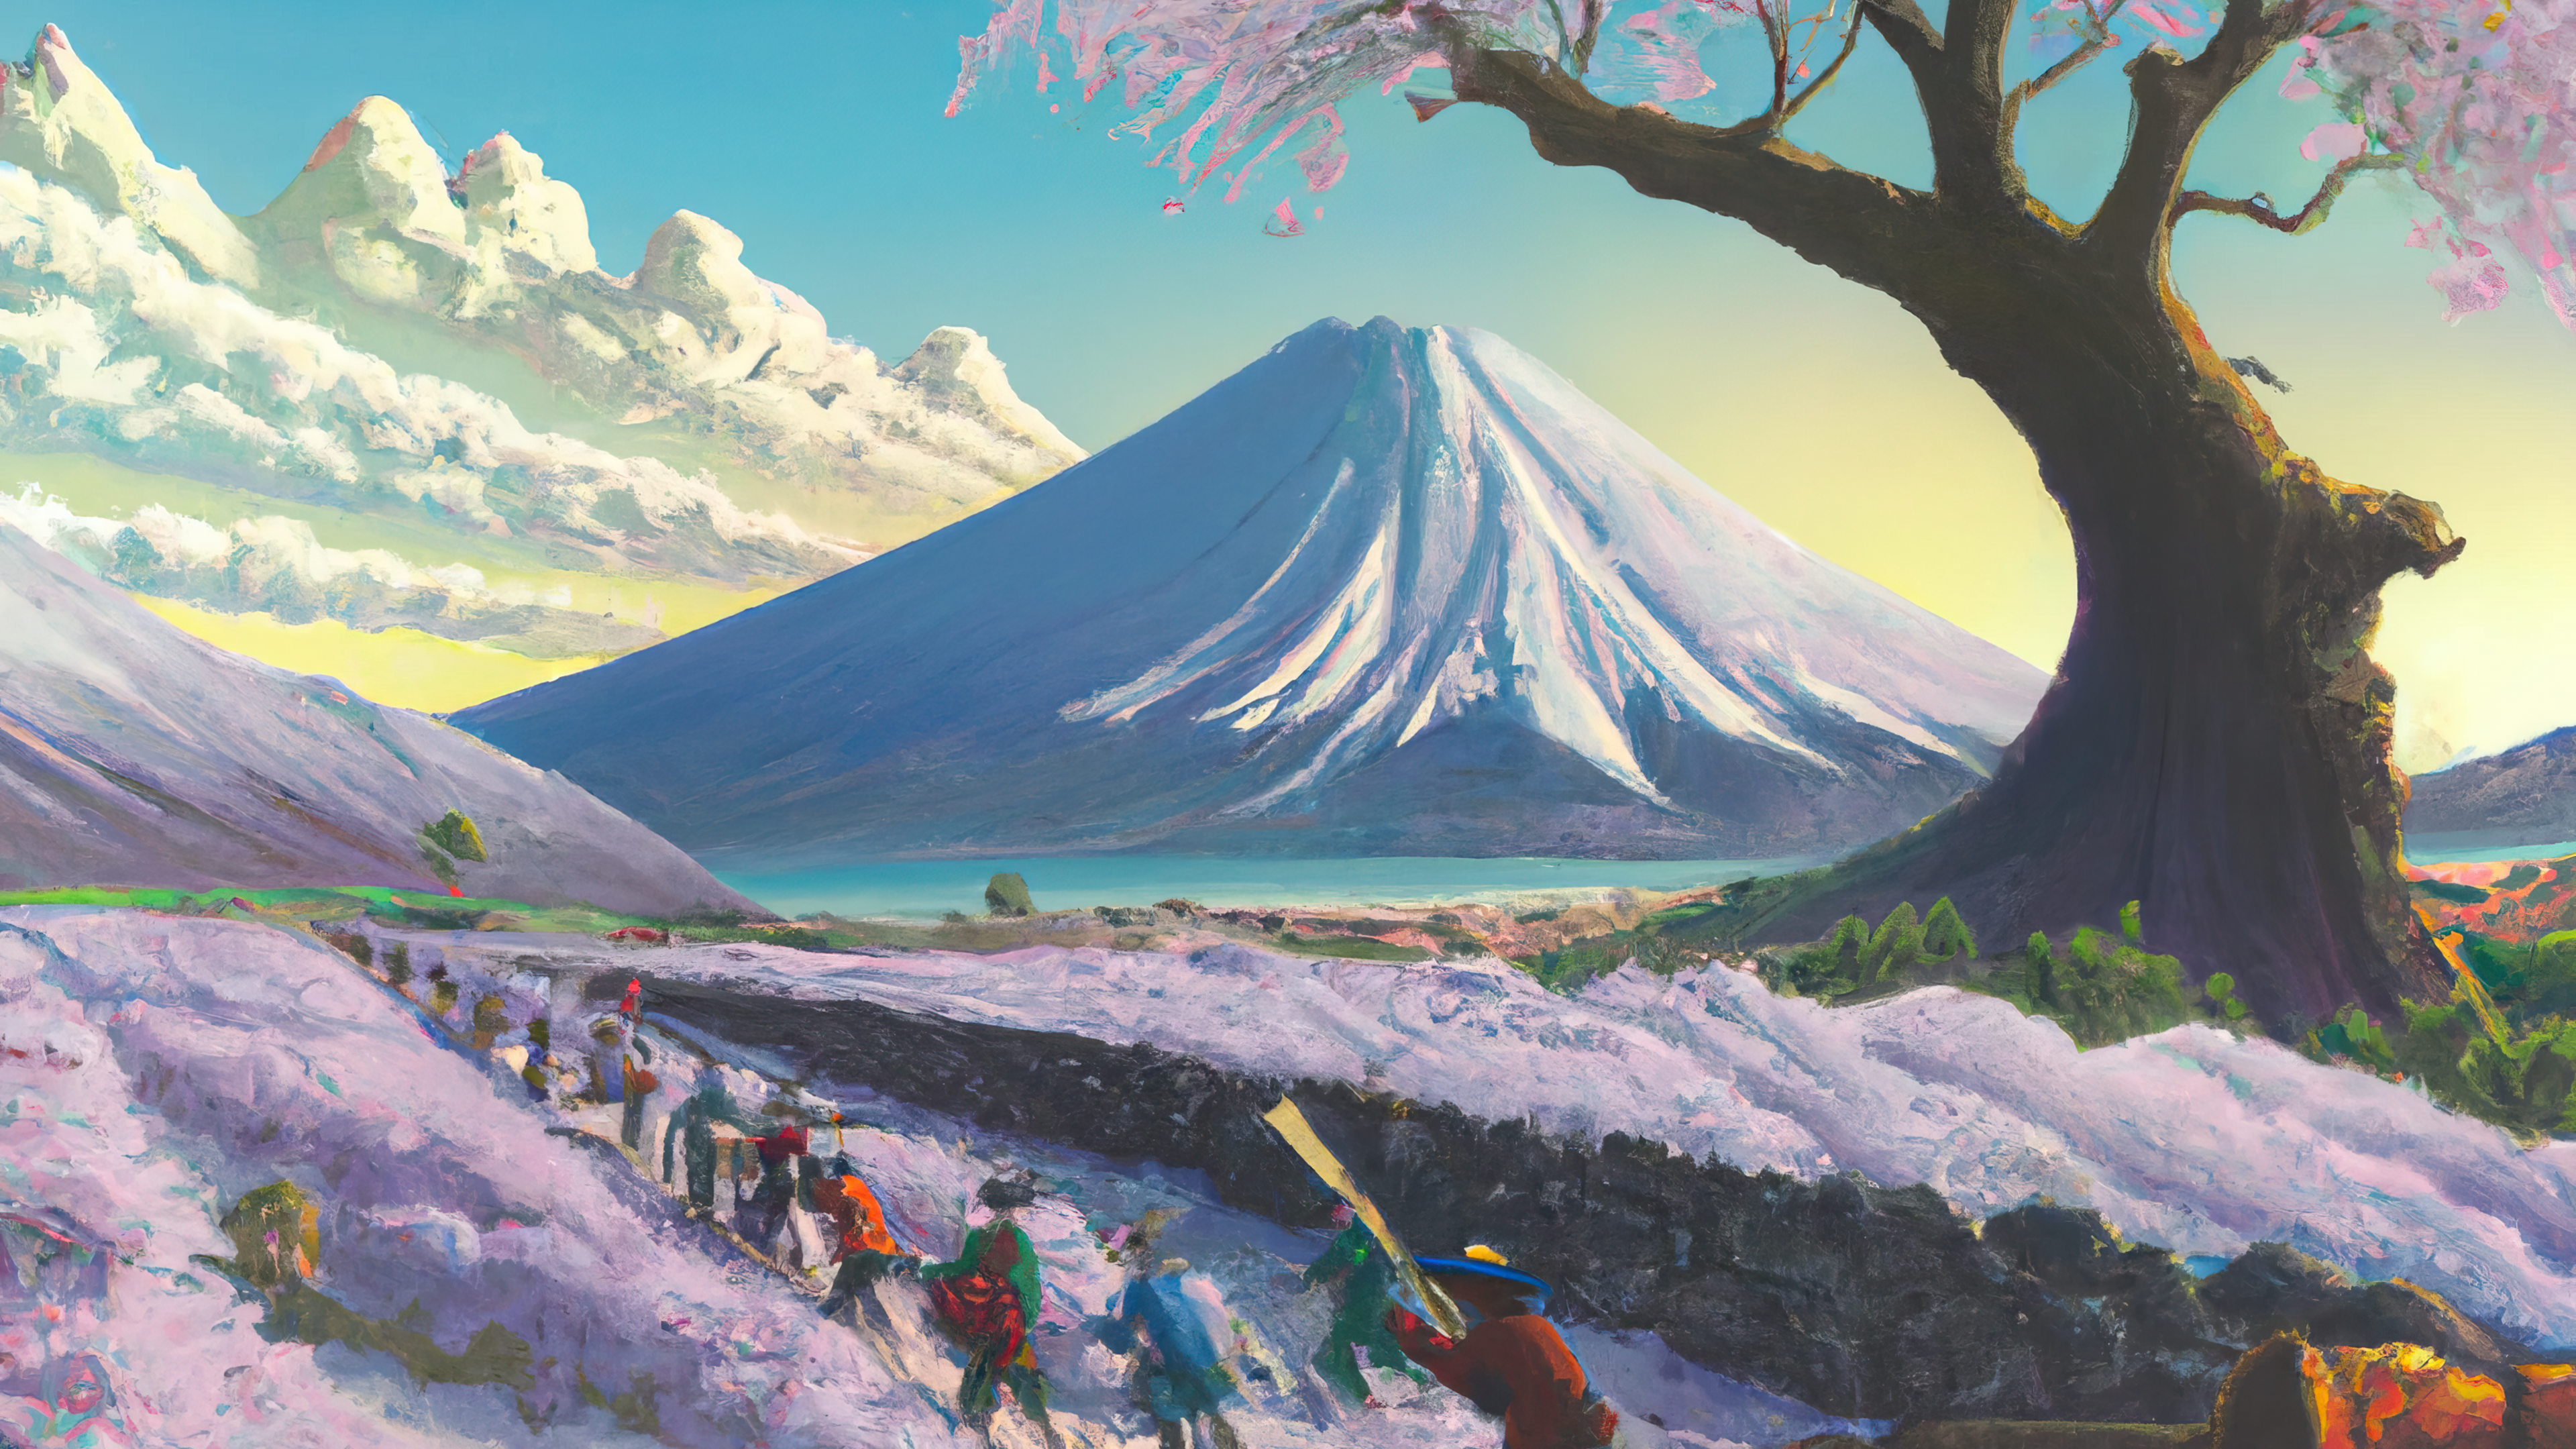 General 3840x2160 painting Japan artwork digital art mountains trees AI art cherry blossom landscape clouds Mount Fuji sky